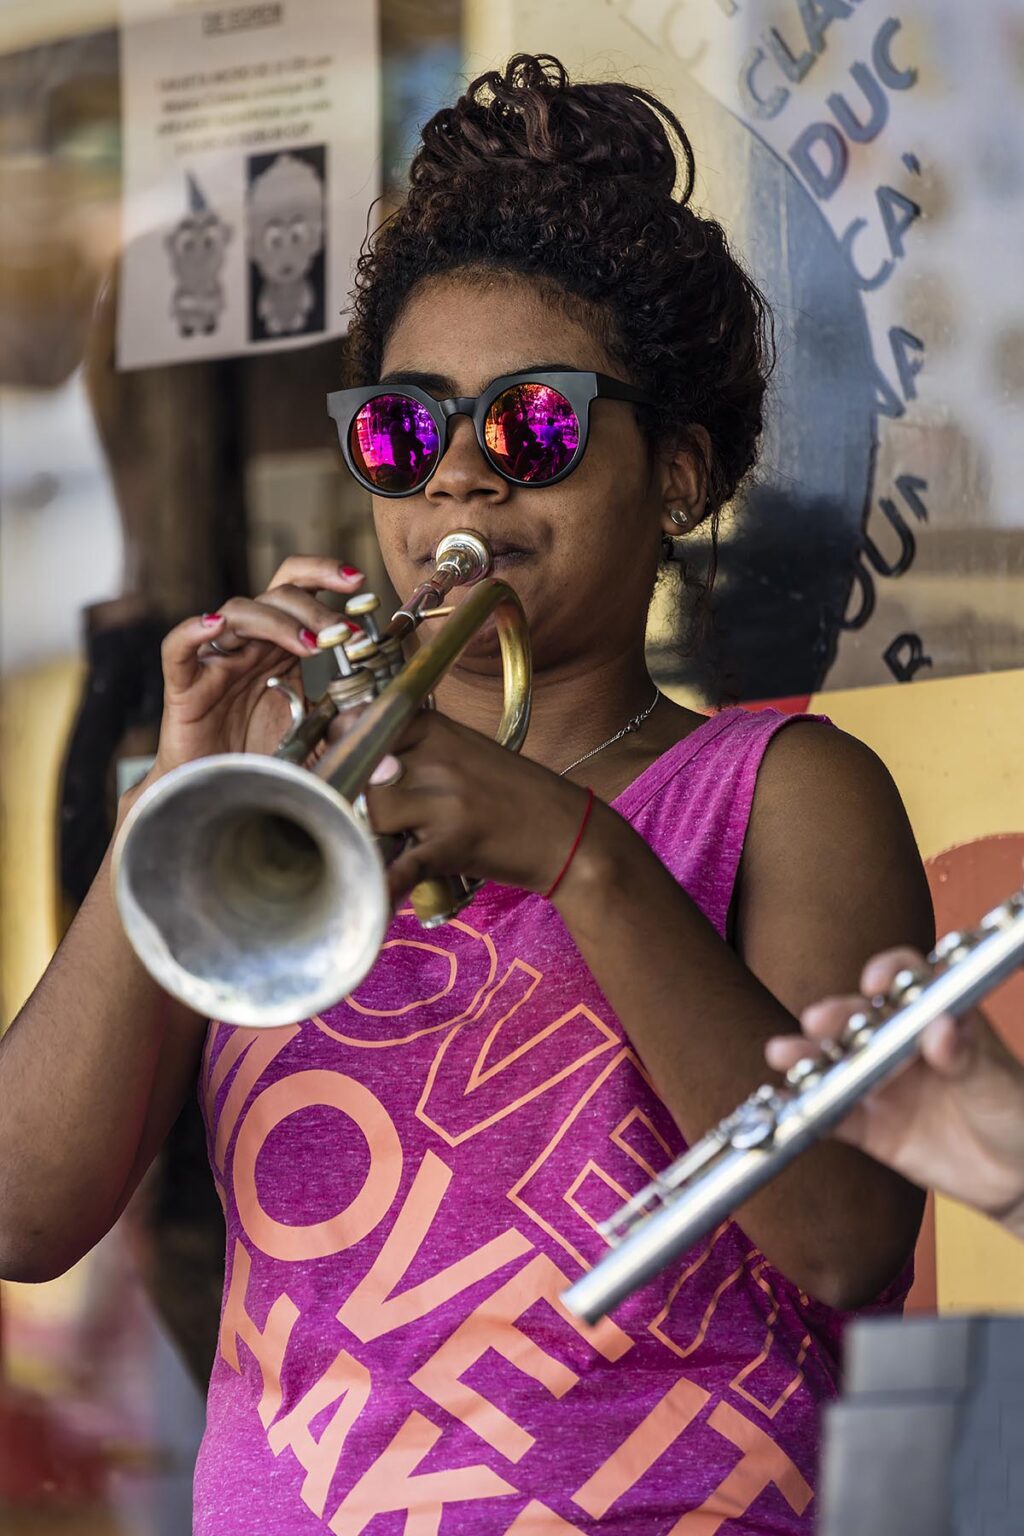 A TRUMPET player entertains tourists with Latin beats in the CASA DE MUSICA - TRINIDAD, CUBA